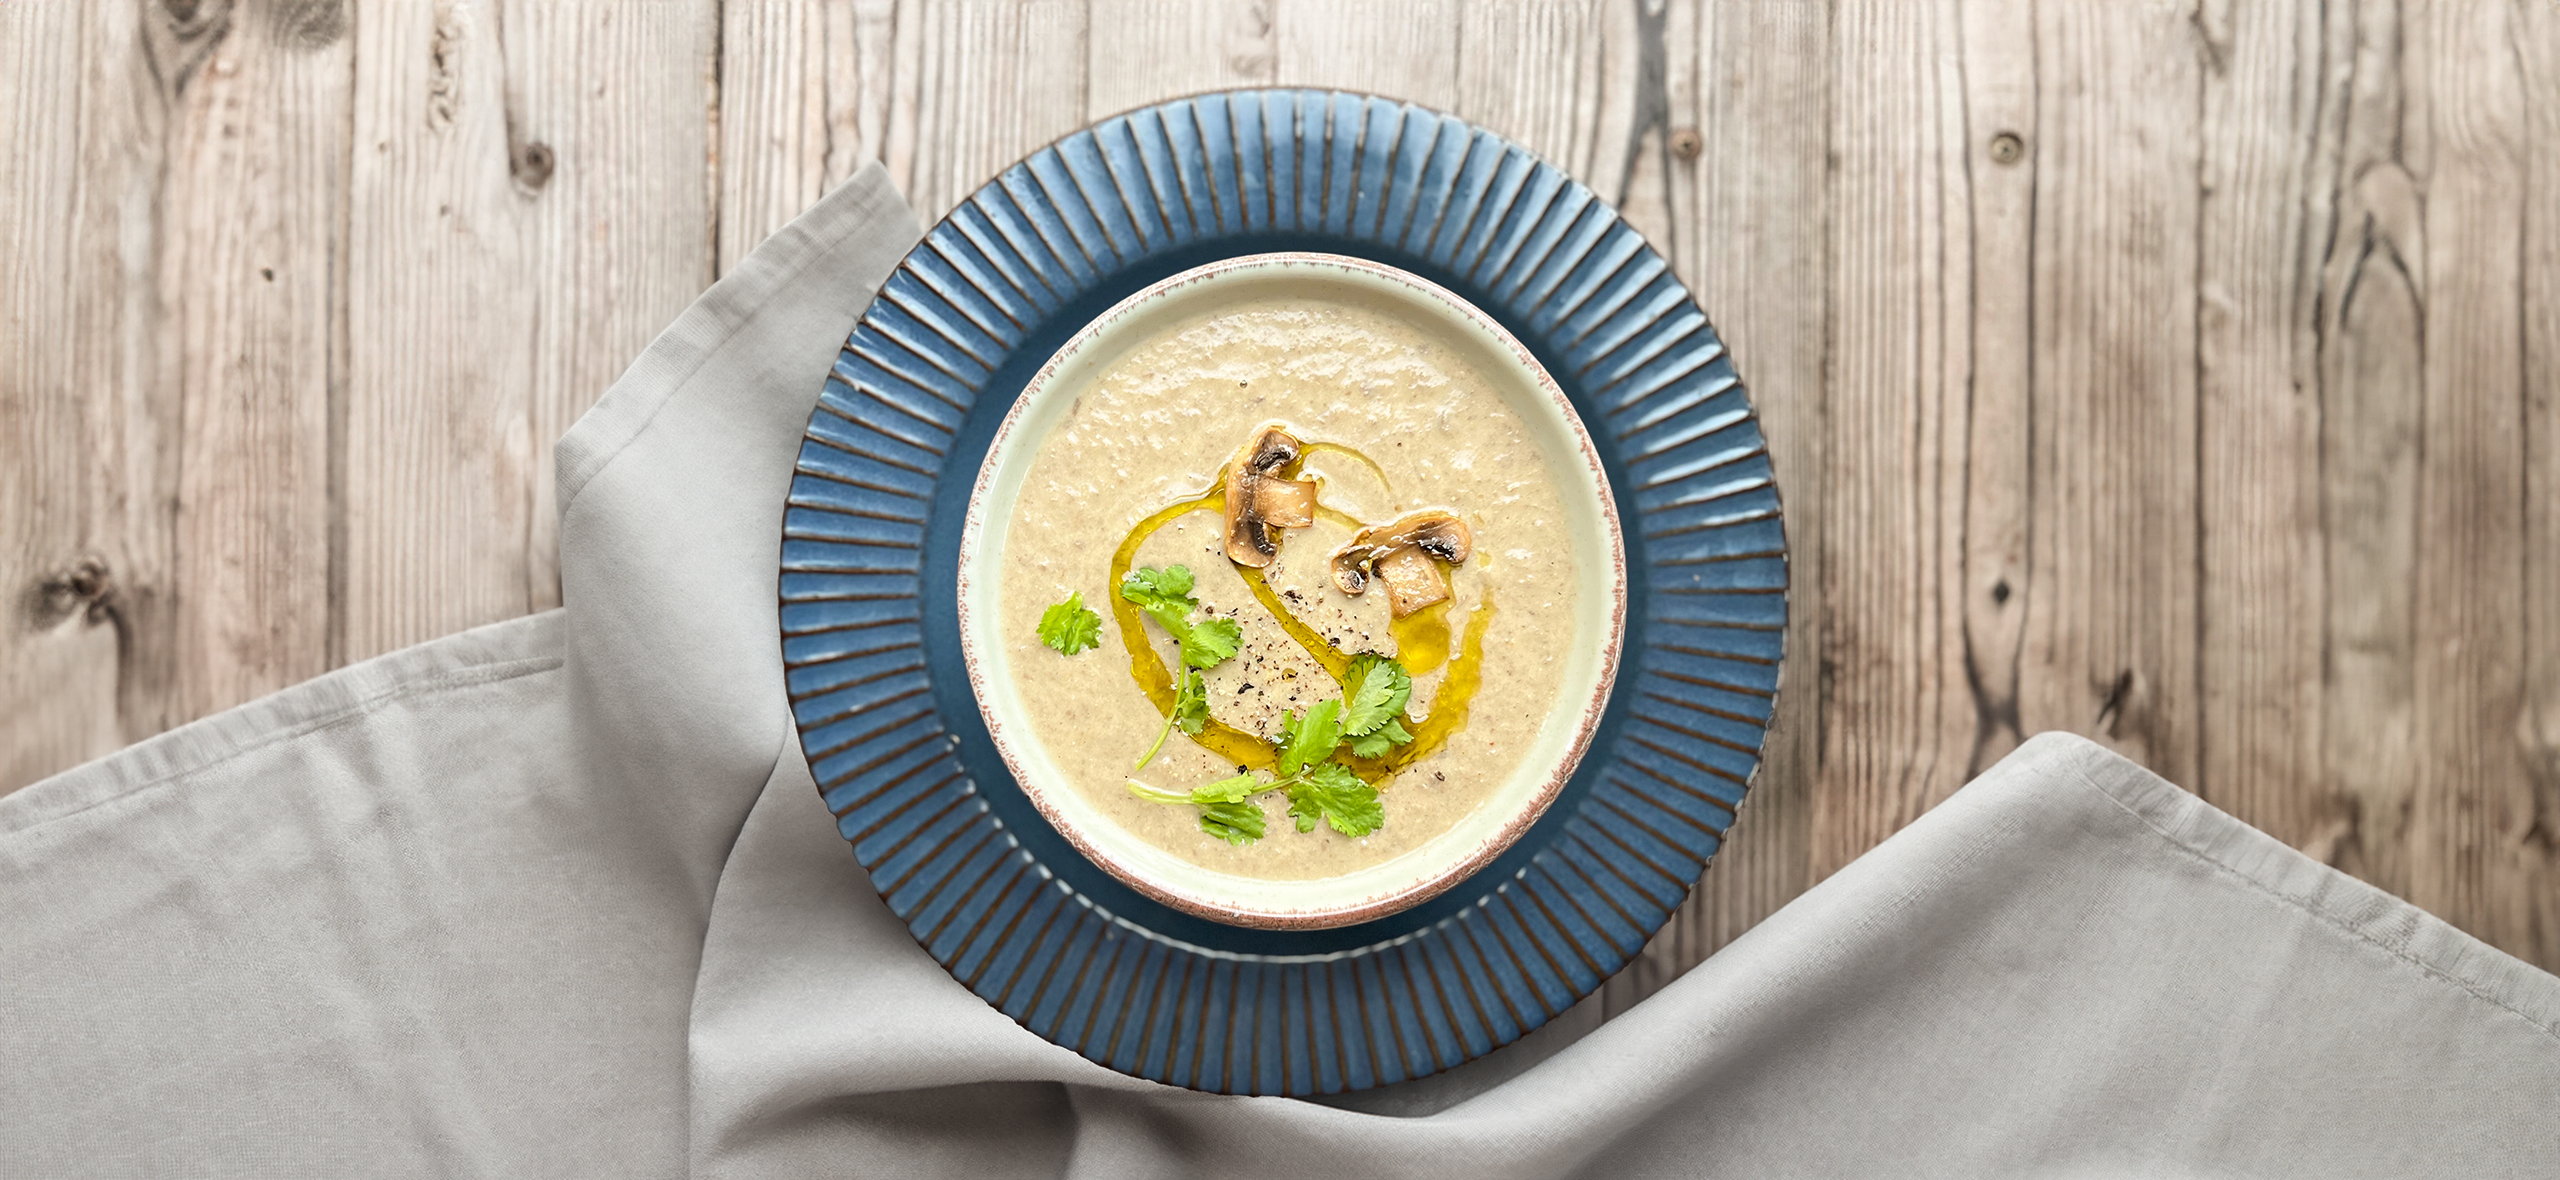 Рецепт нежного грибного супа-пюре со сливками